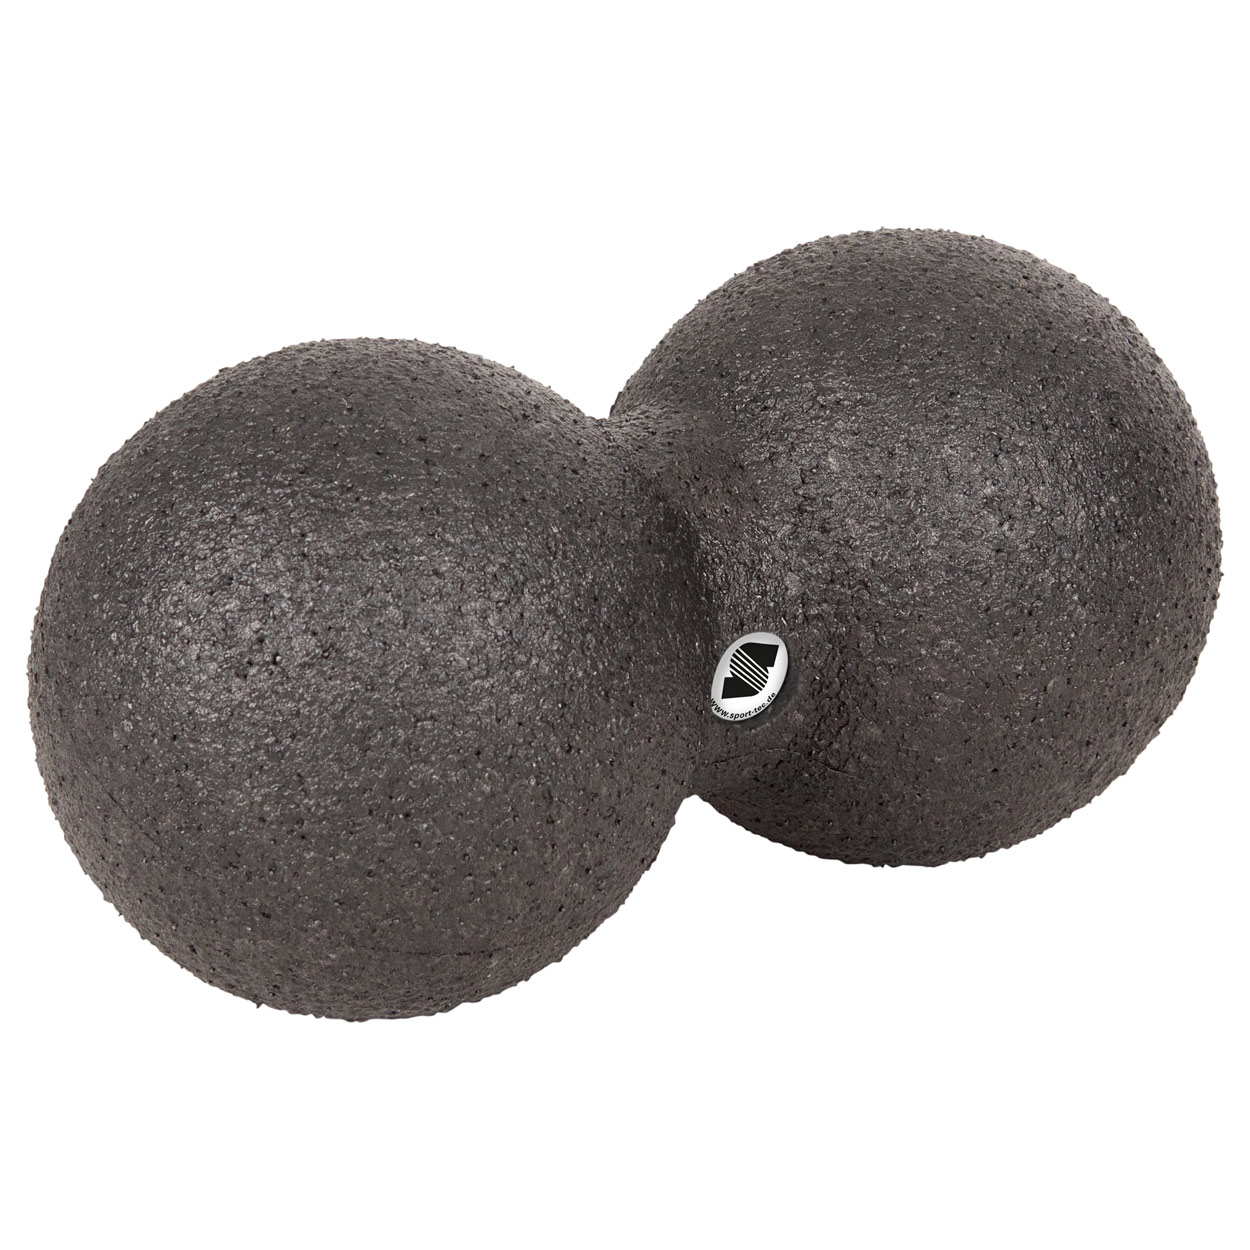 fundament overhead consensus BLACKROLL ball DUO, Ø 12 cm, black buy online | Sport-Tec